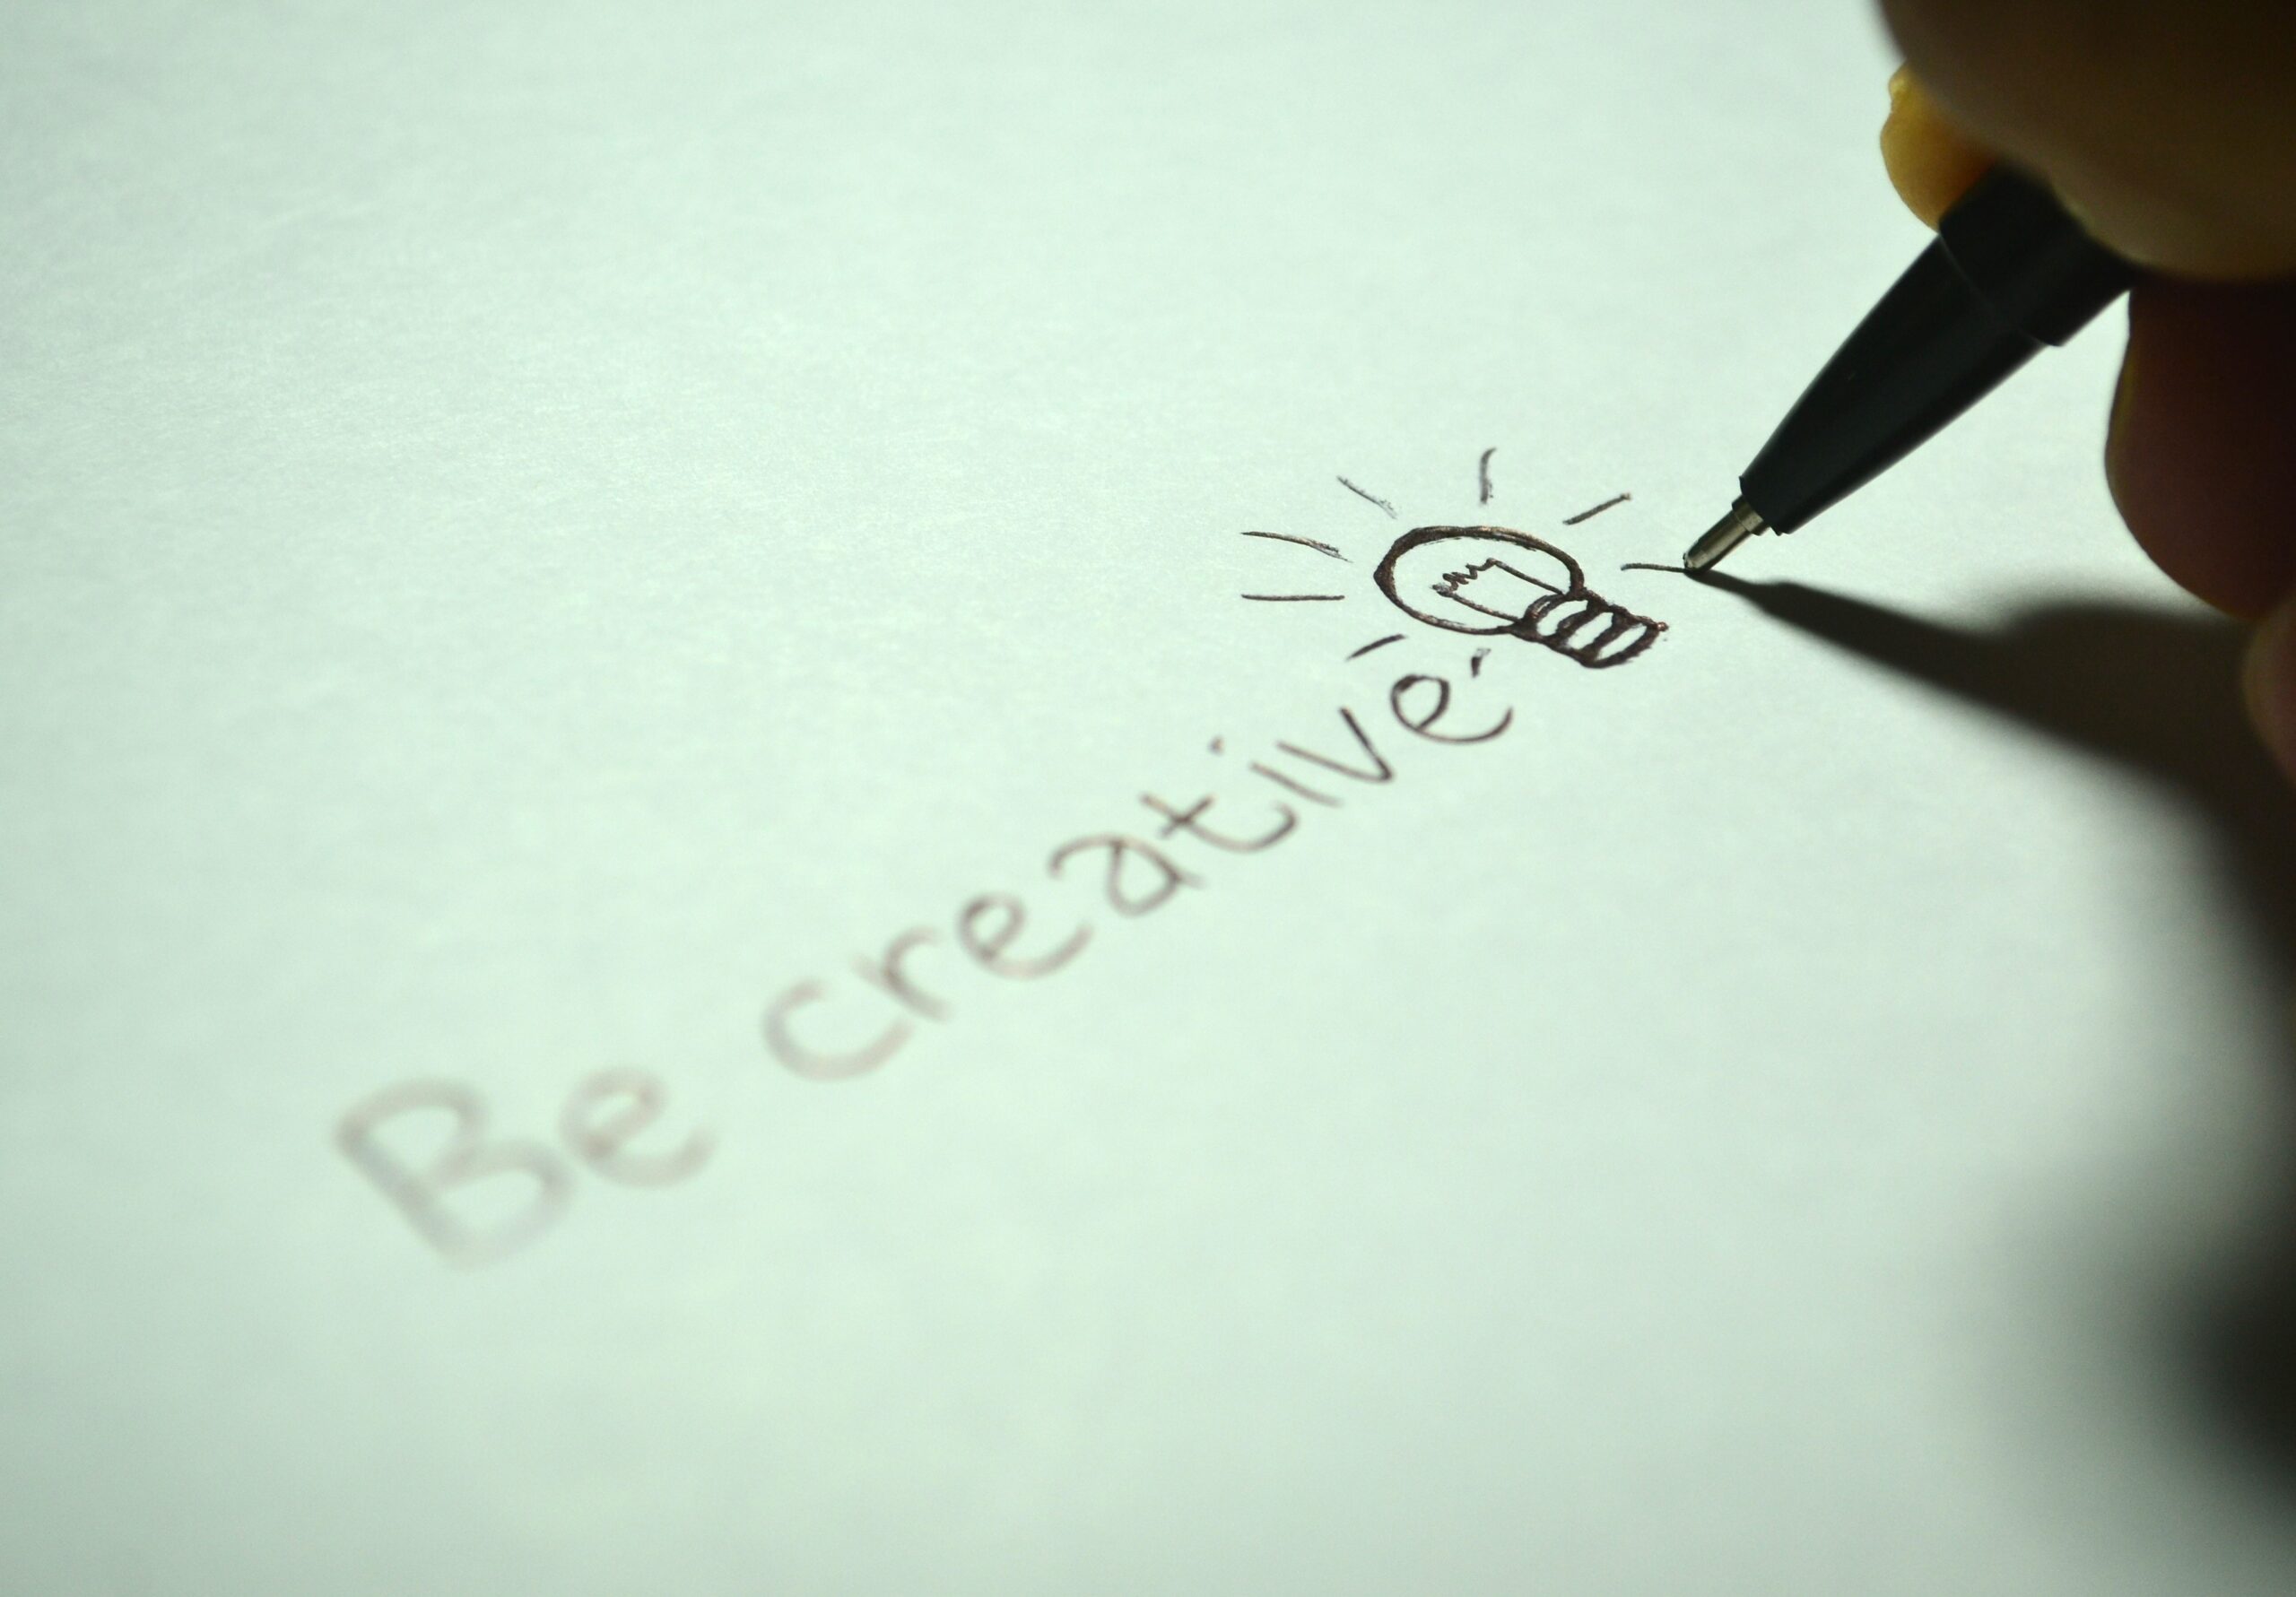 Be Creative At Work